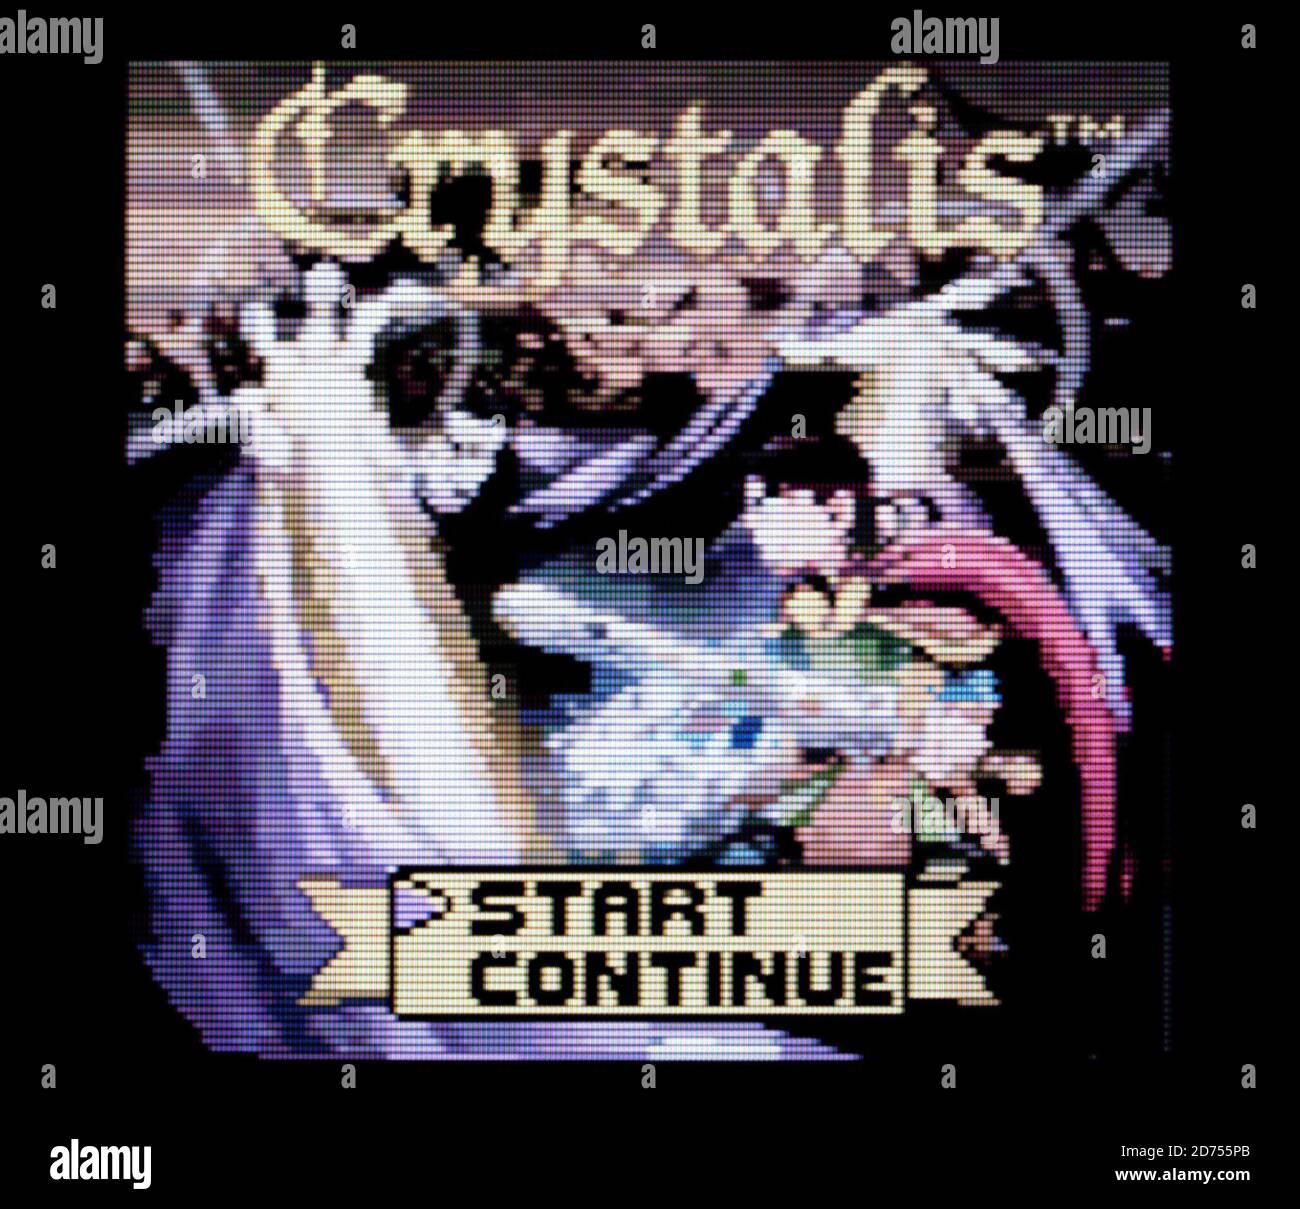 Crystalis - Nintendo Game Boy Color Videogame - redaktionelle Verwendung Nur Stockfoto